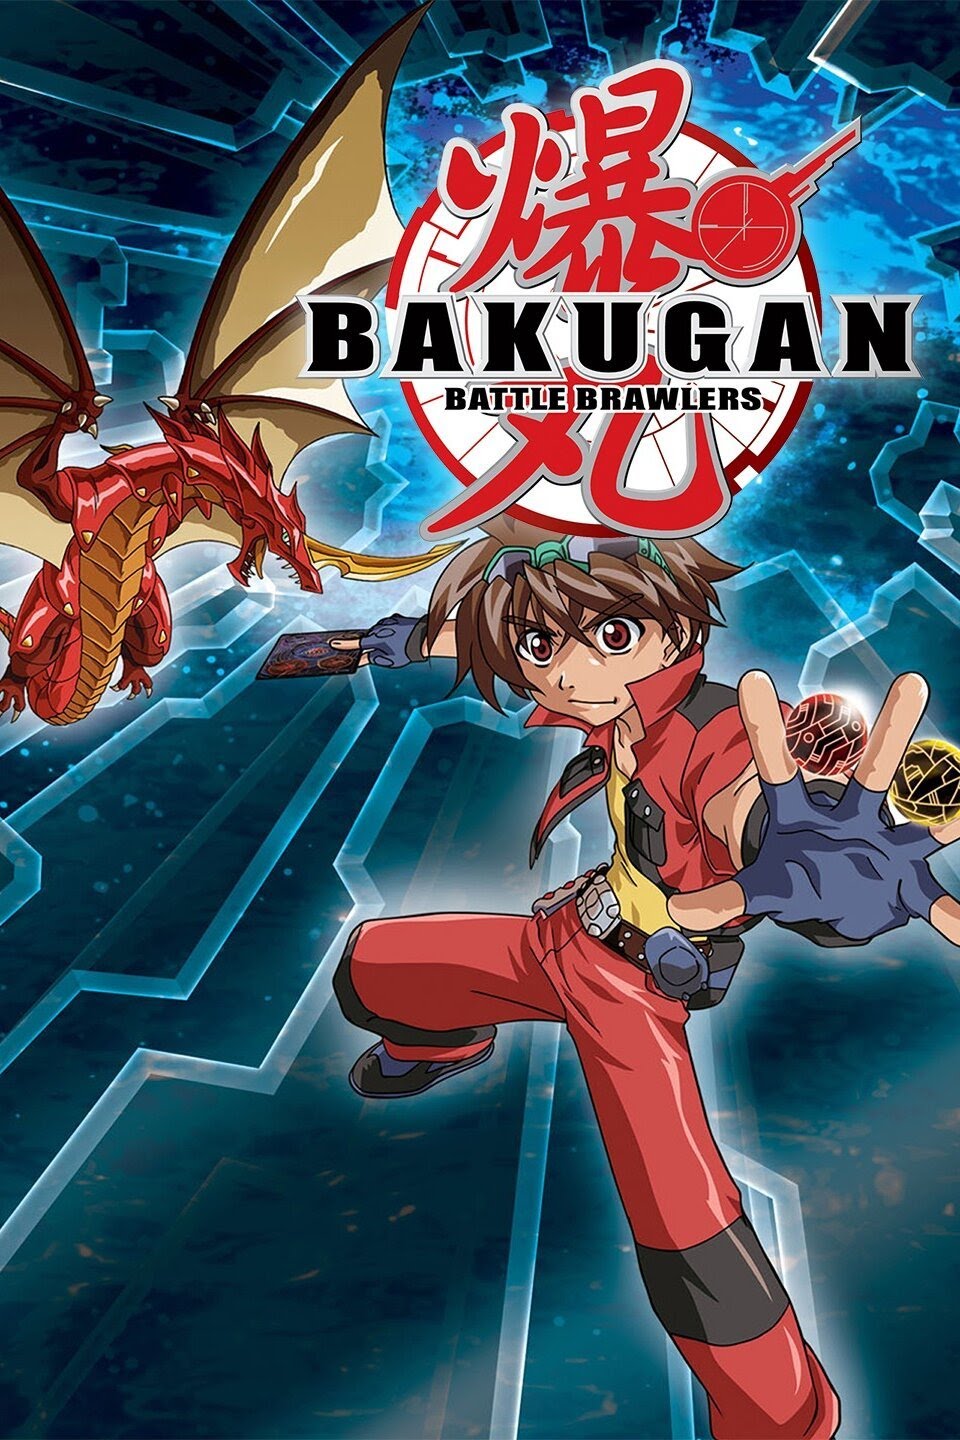 Spin Master to play Bakugan anime in Roblox as metaverse experience   VentureBeat